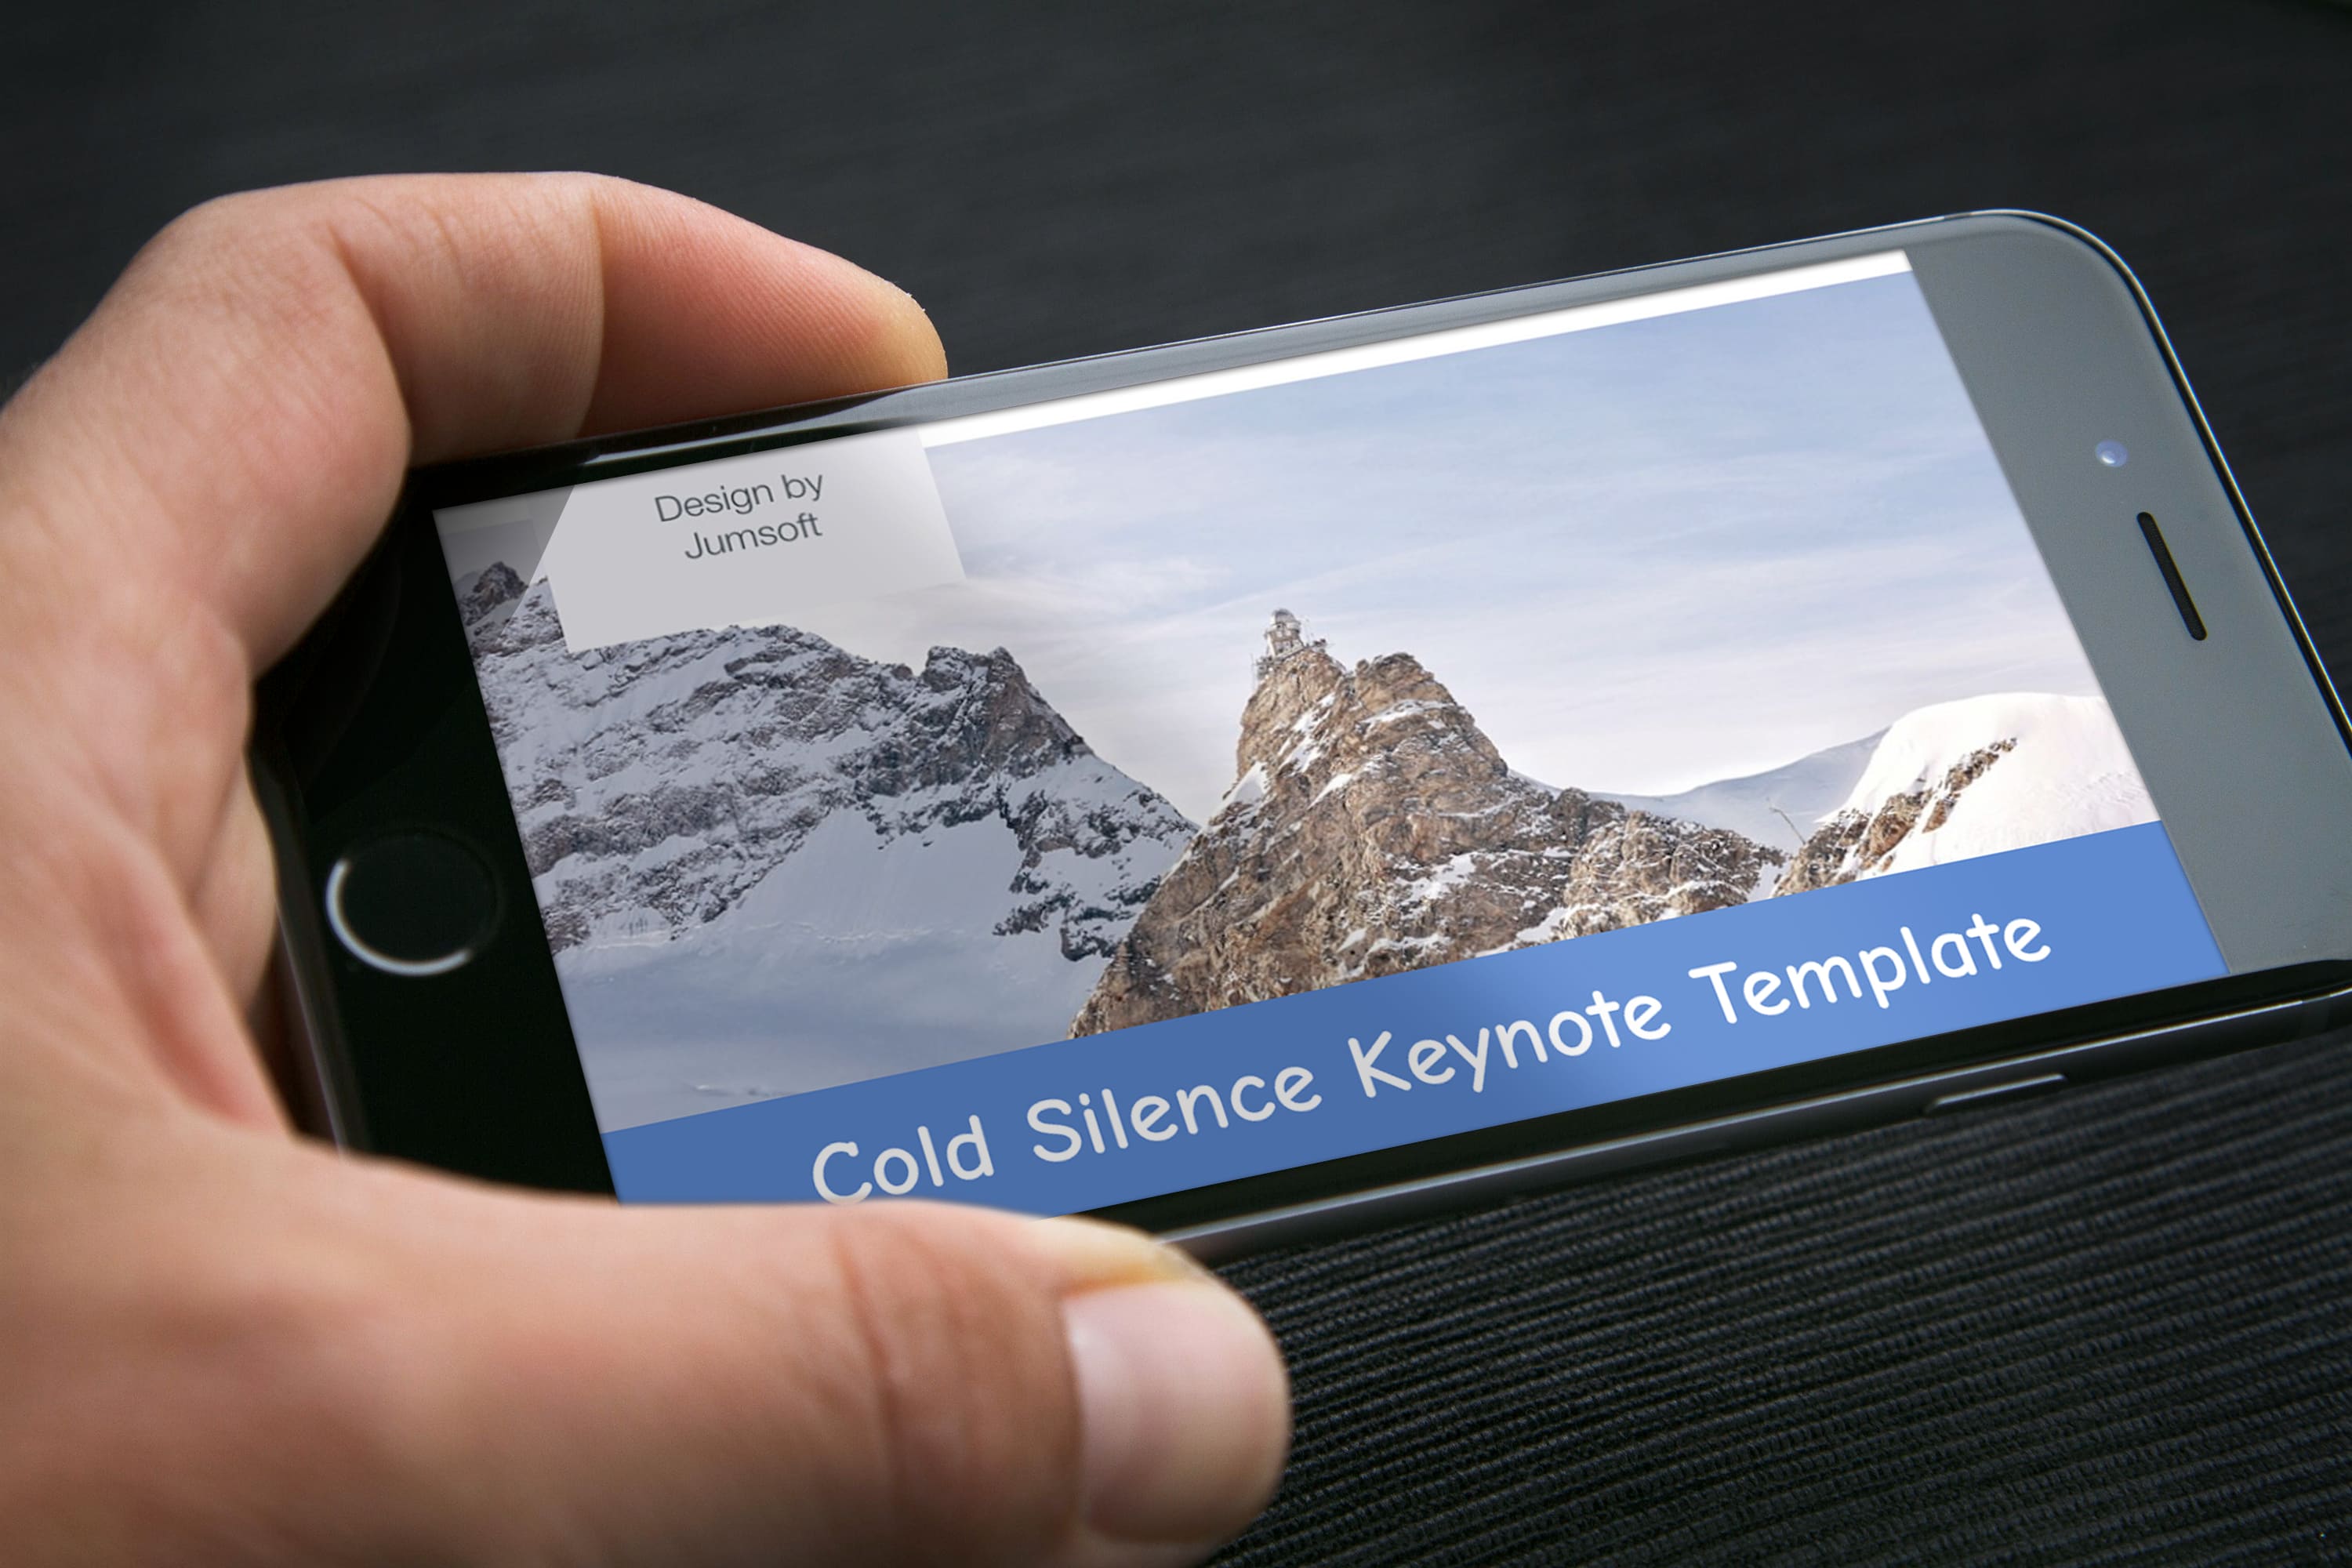 Cold Silence Keynote Template - Mockup on Smartphone.